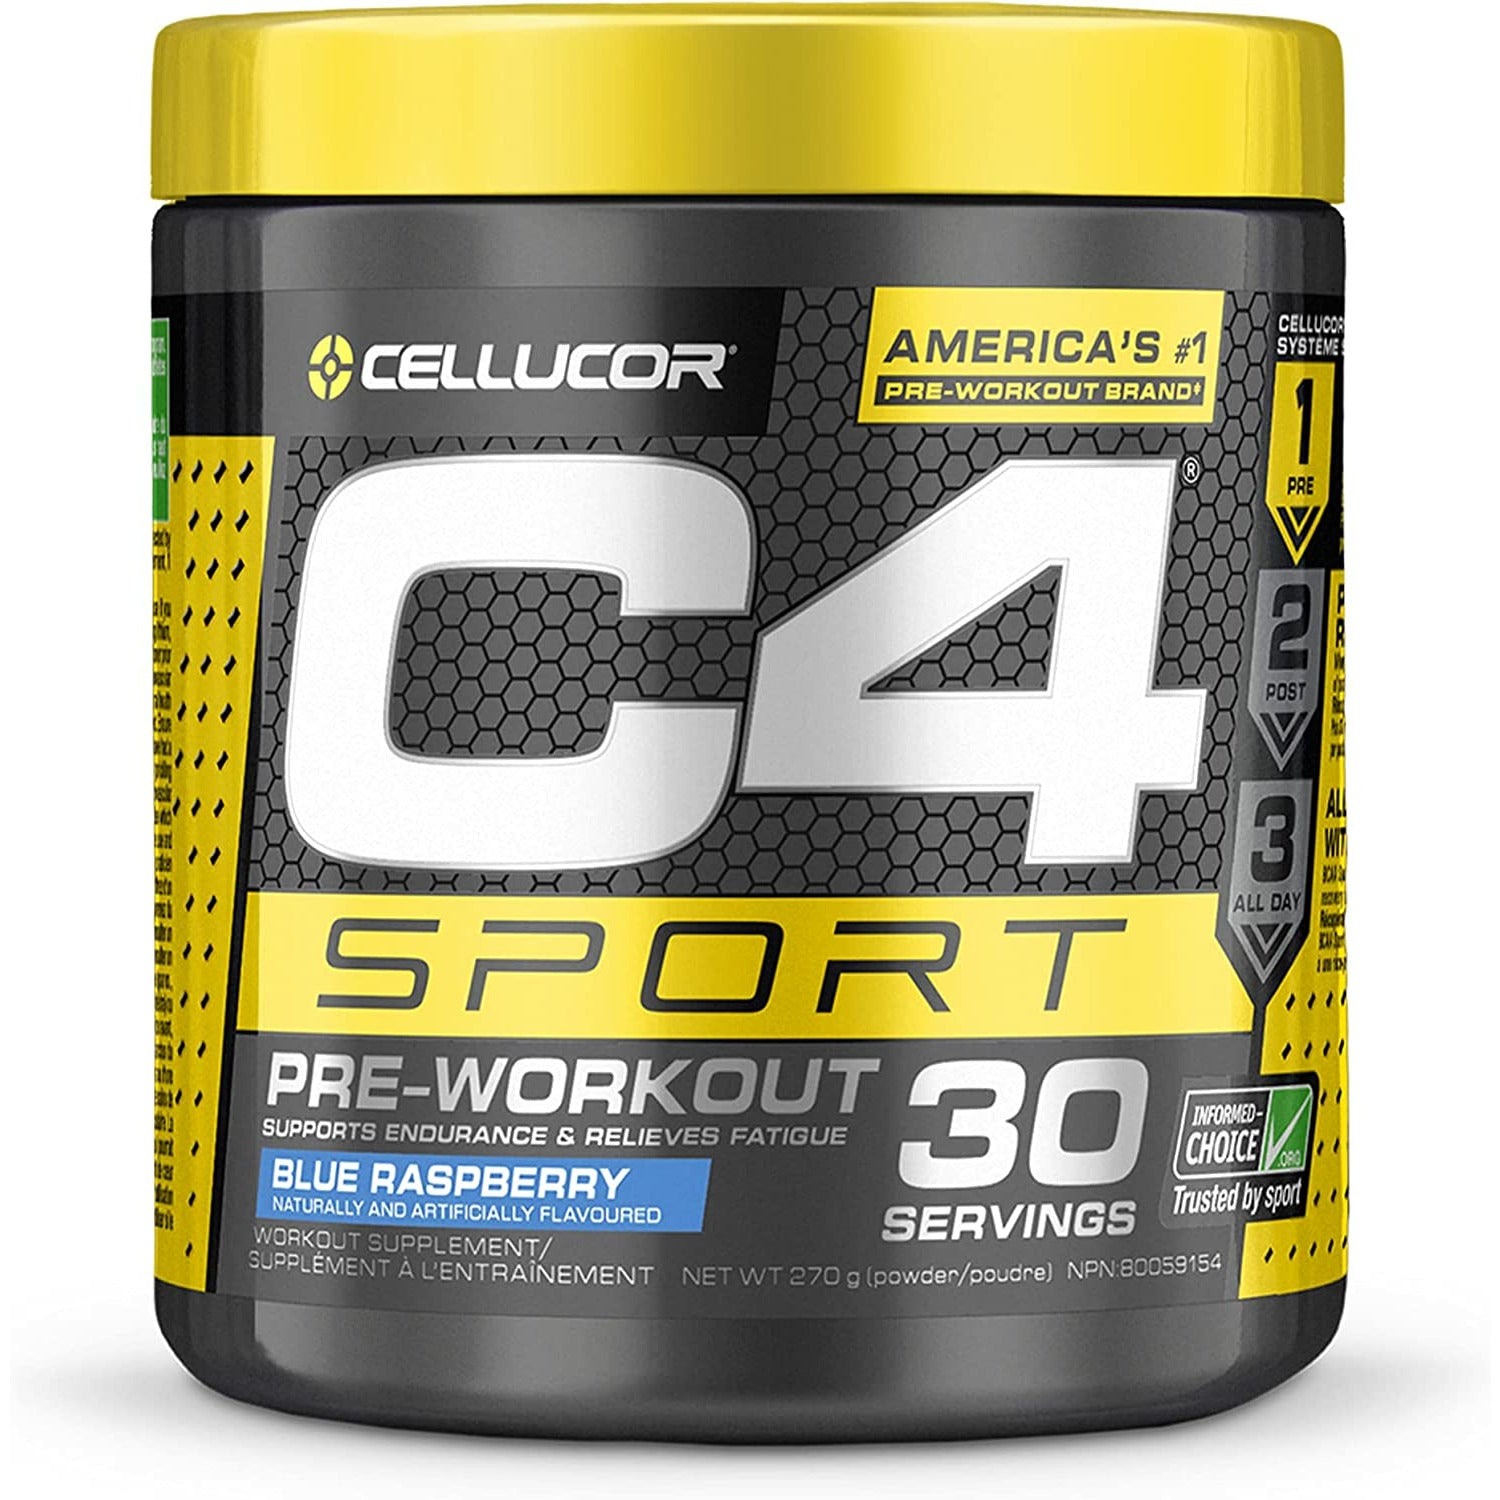 Cellucor NEW C4 SPORT Pre-Workout (30 servings) cellucor-new-c4-sport-pre-workout-30-servings Blue Raspberry Cellucor